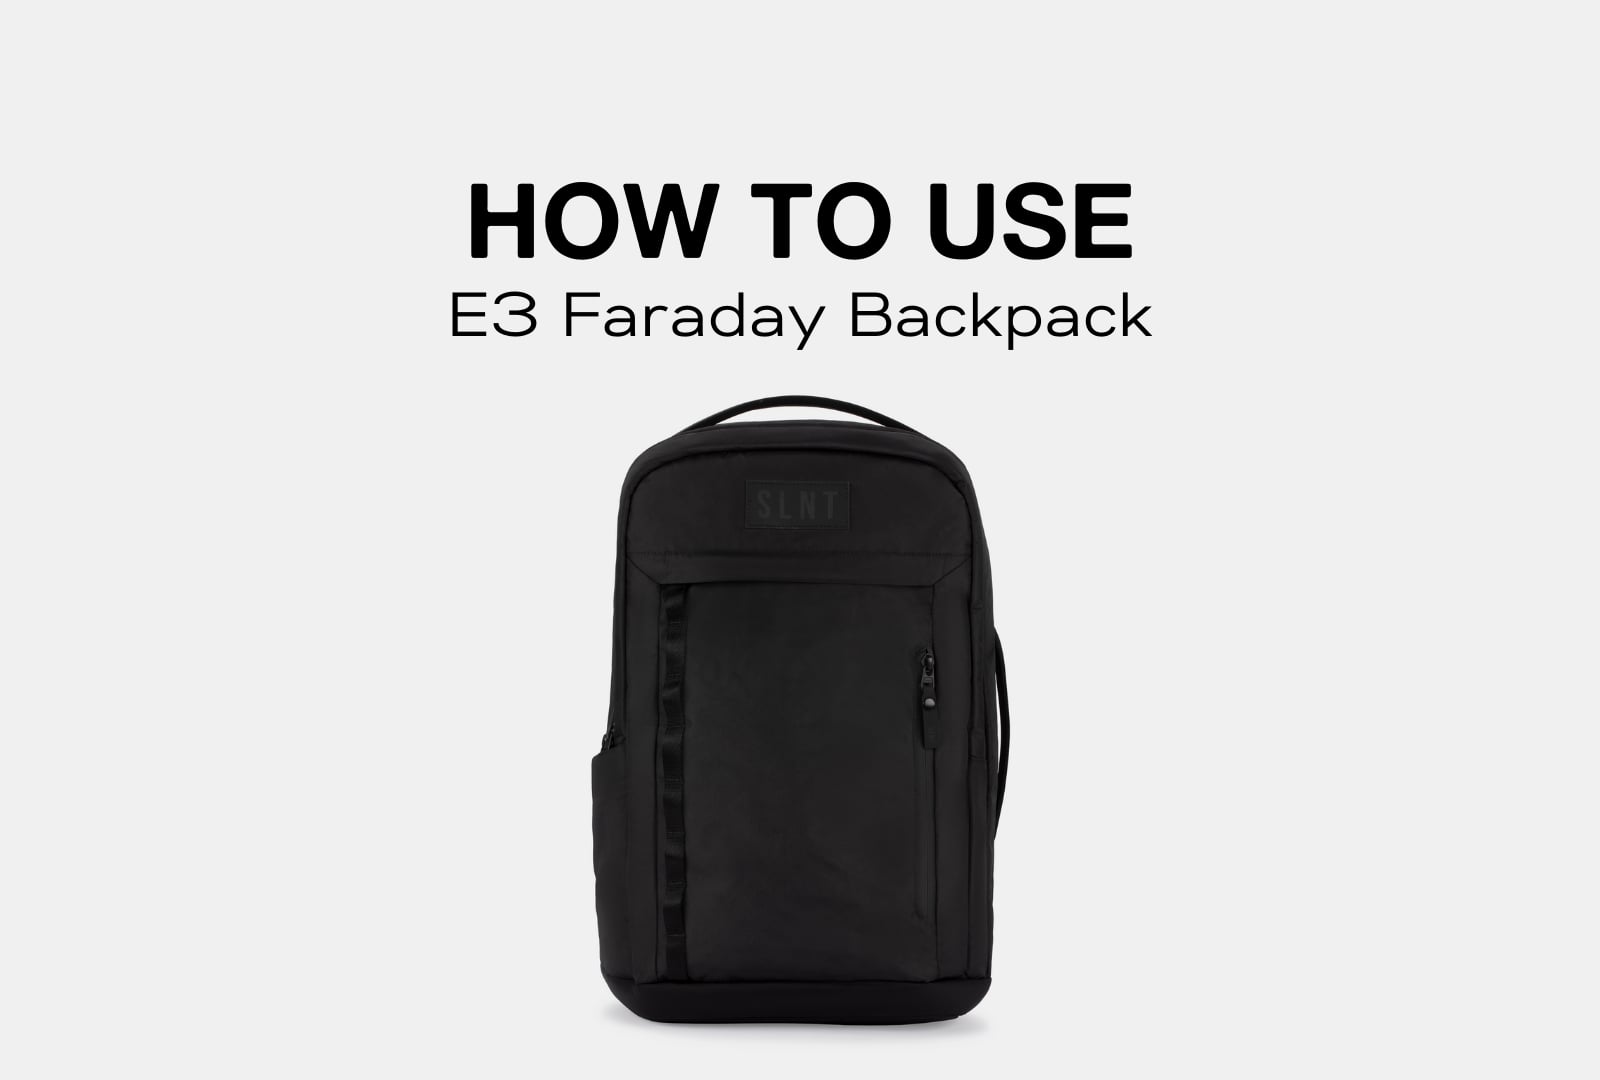 How to use SLNT E3 Faraday Backpack on Vimeo